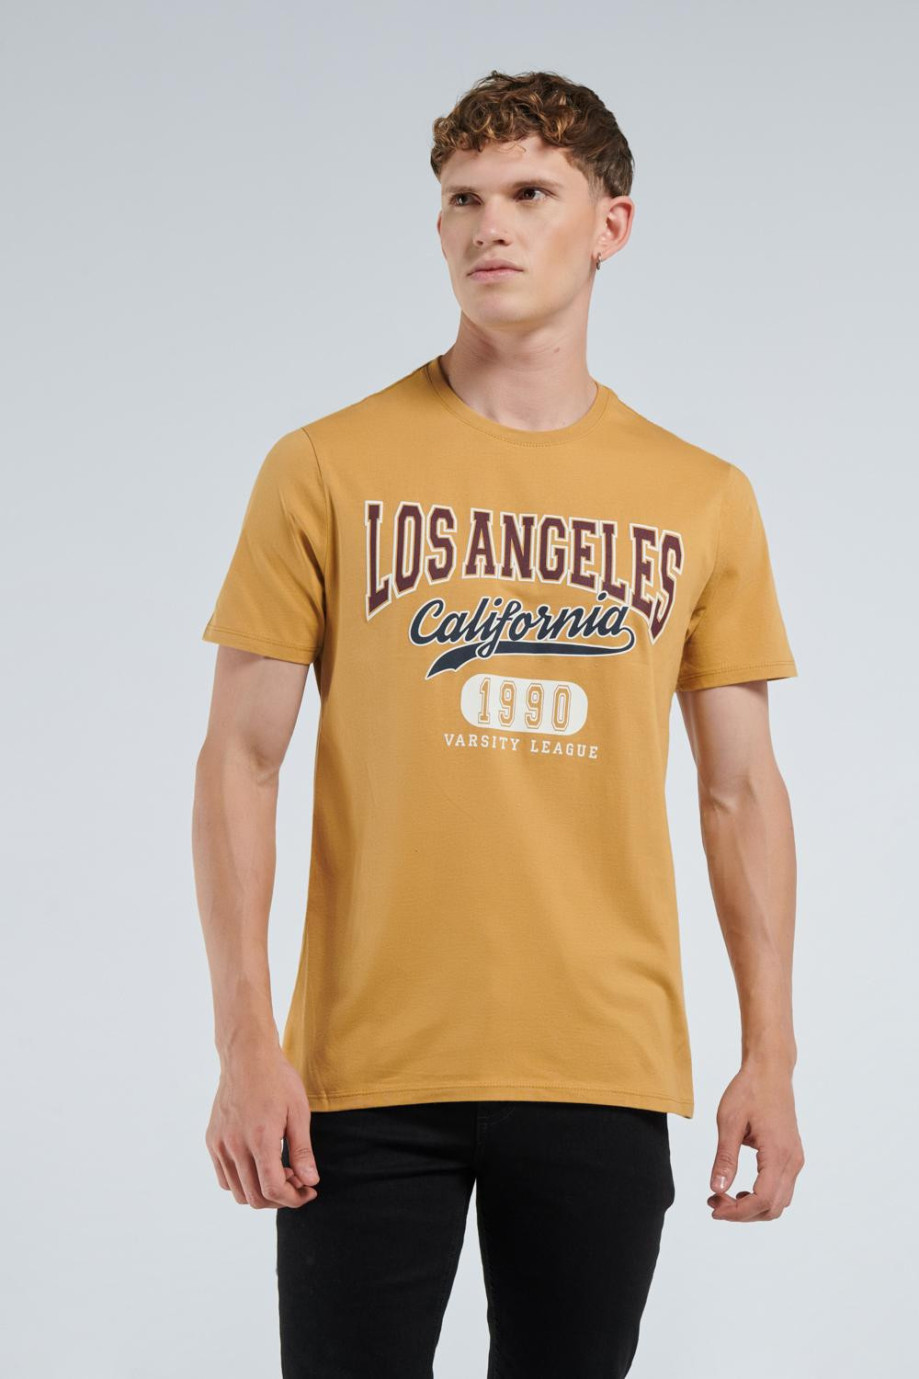 Camiseta kaky clara con manga corta y diseño college en frente